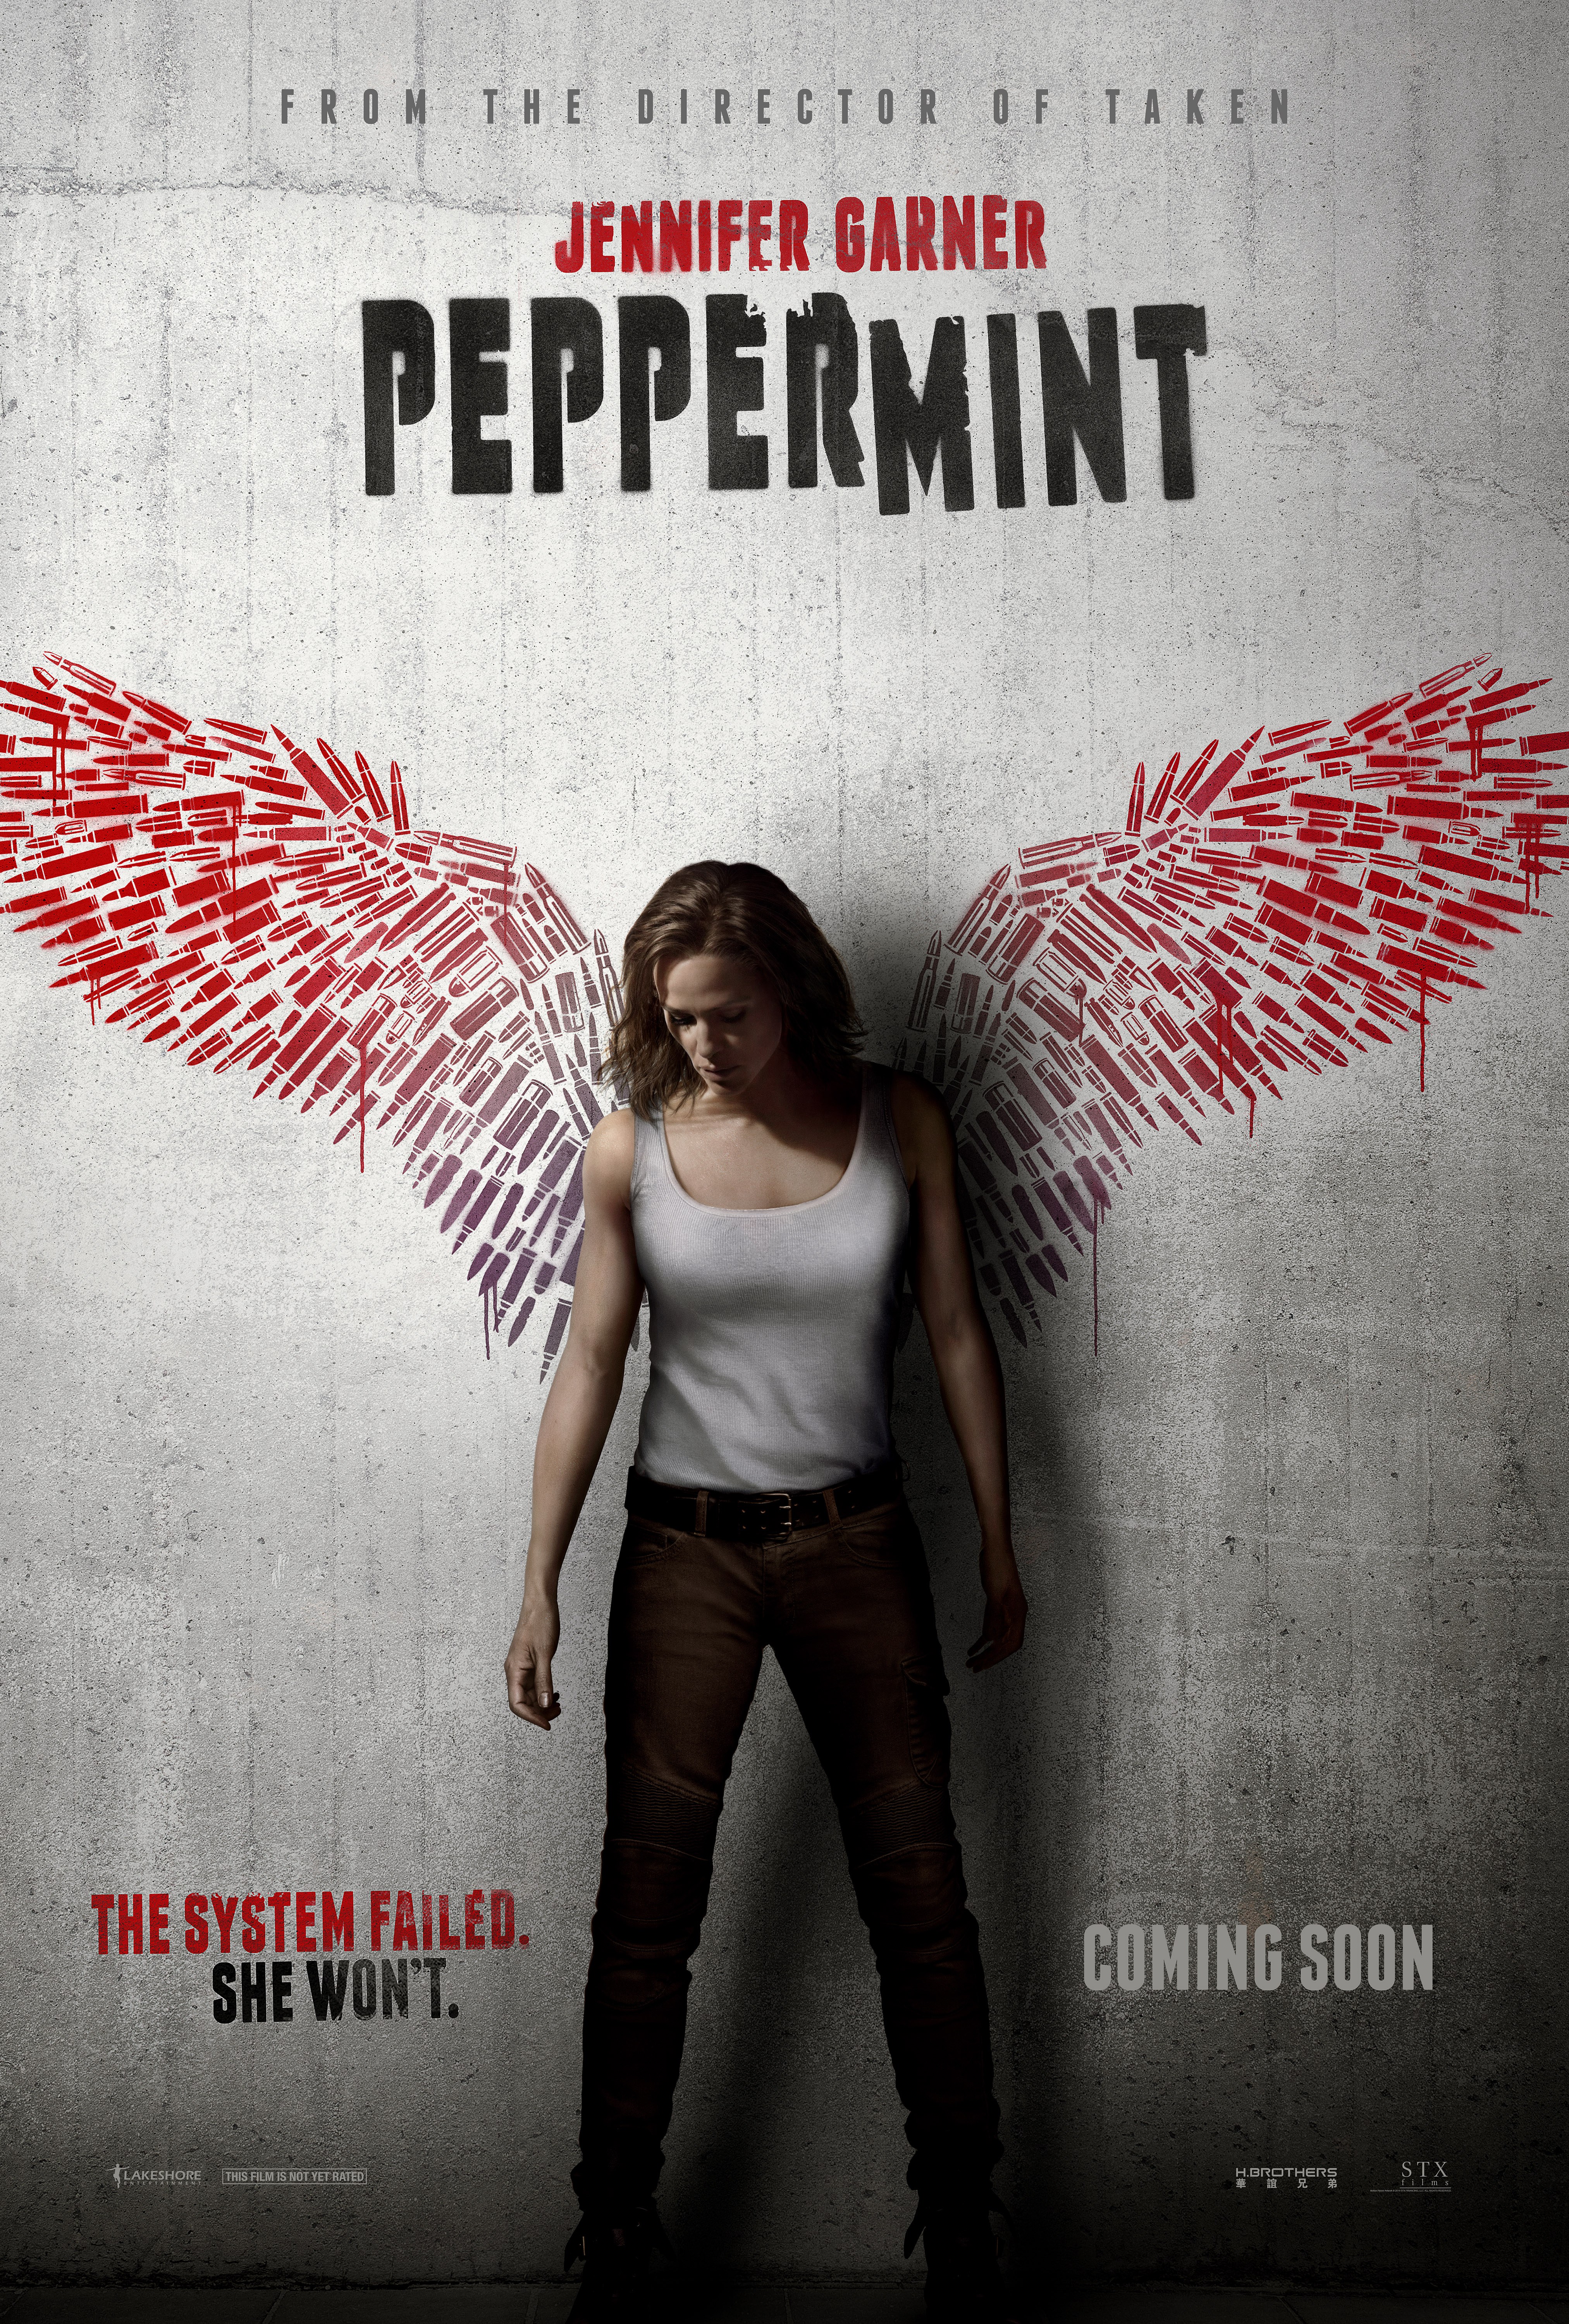 Nonton film Peppermint layarkaca21 indoxx1 ganool online streaming terbaru